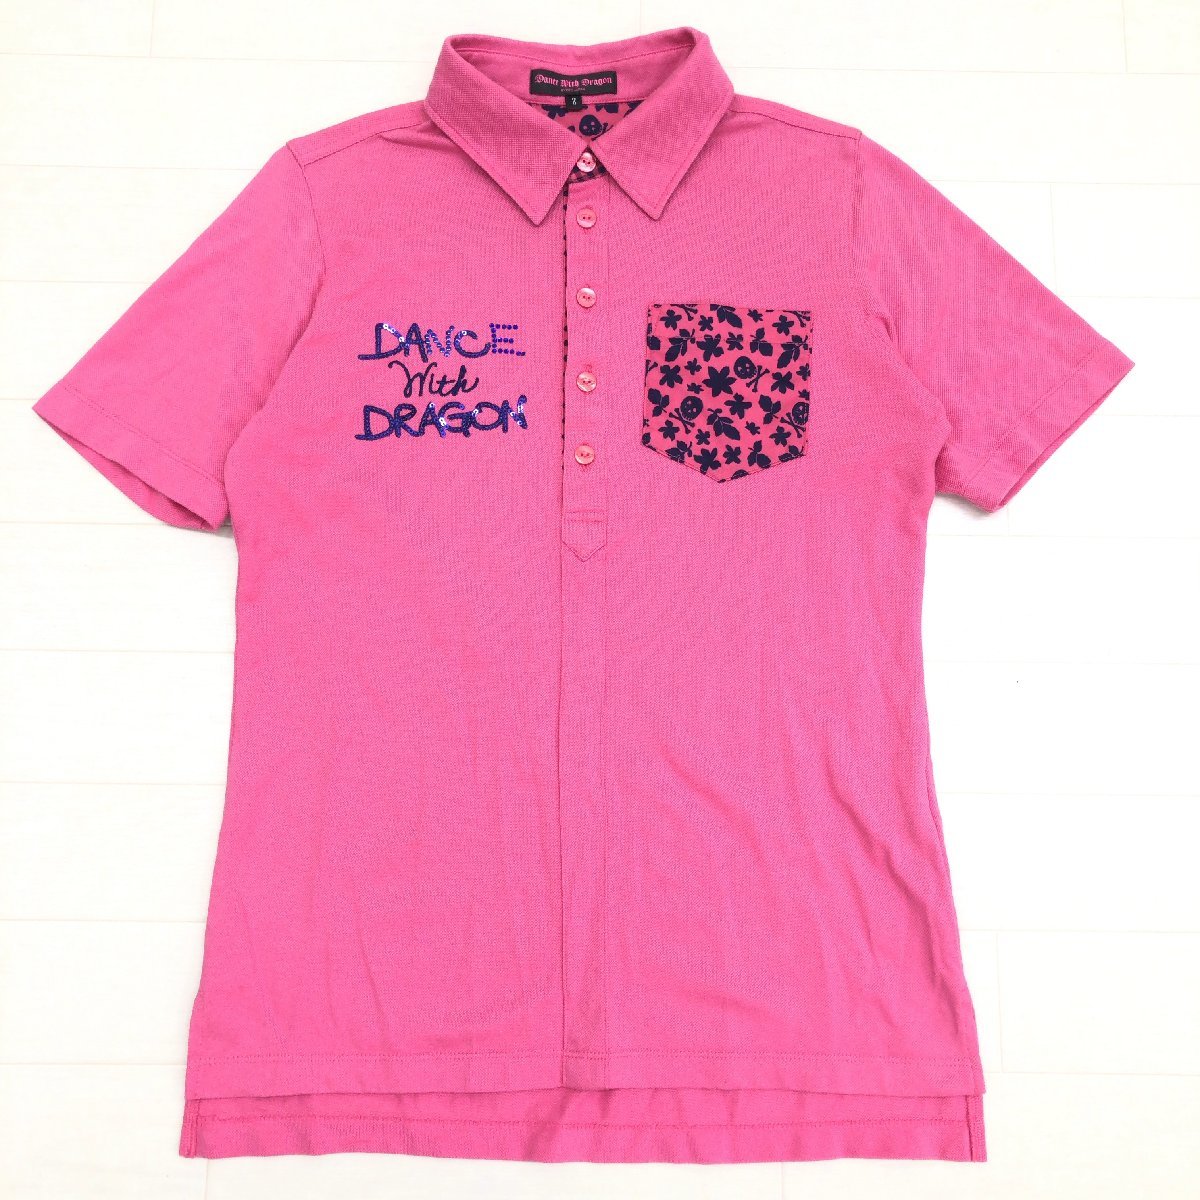 DANCE WITH DRAGON ダンスウィズドラゴン 吸水速乾 ドライ ゴルフシャツ 2(M) ピンク 半袖 ポロシャツ 日本製 レディース 女性用の画像1